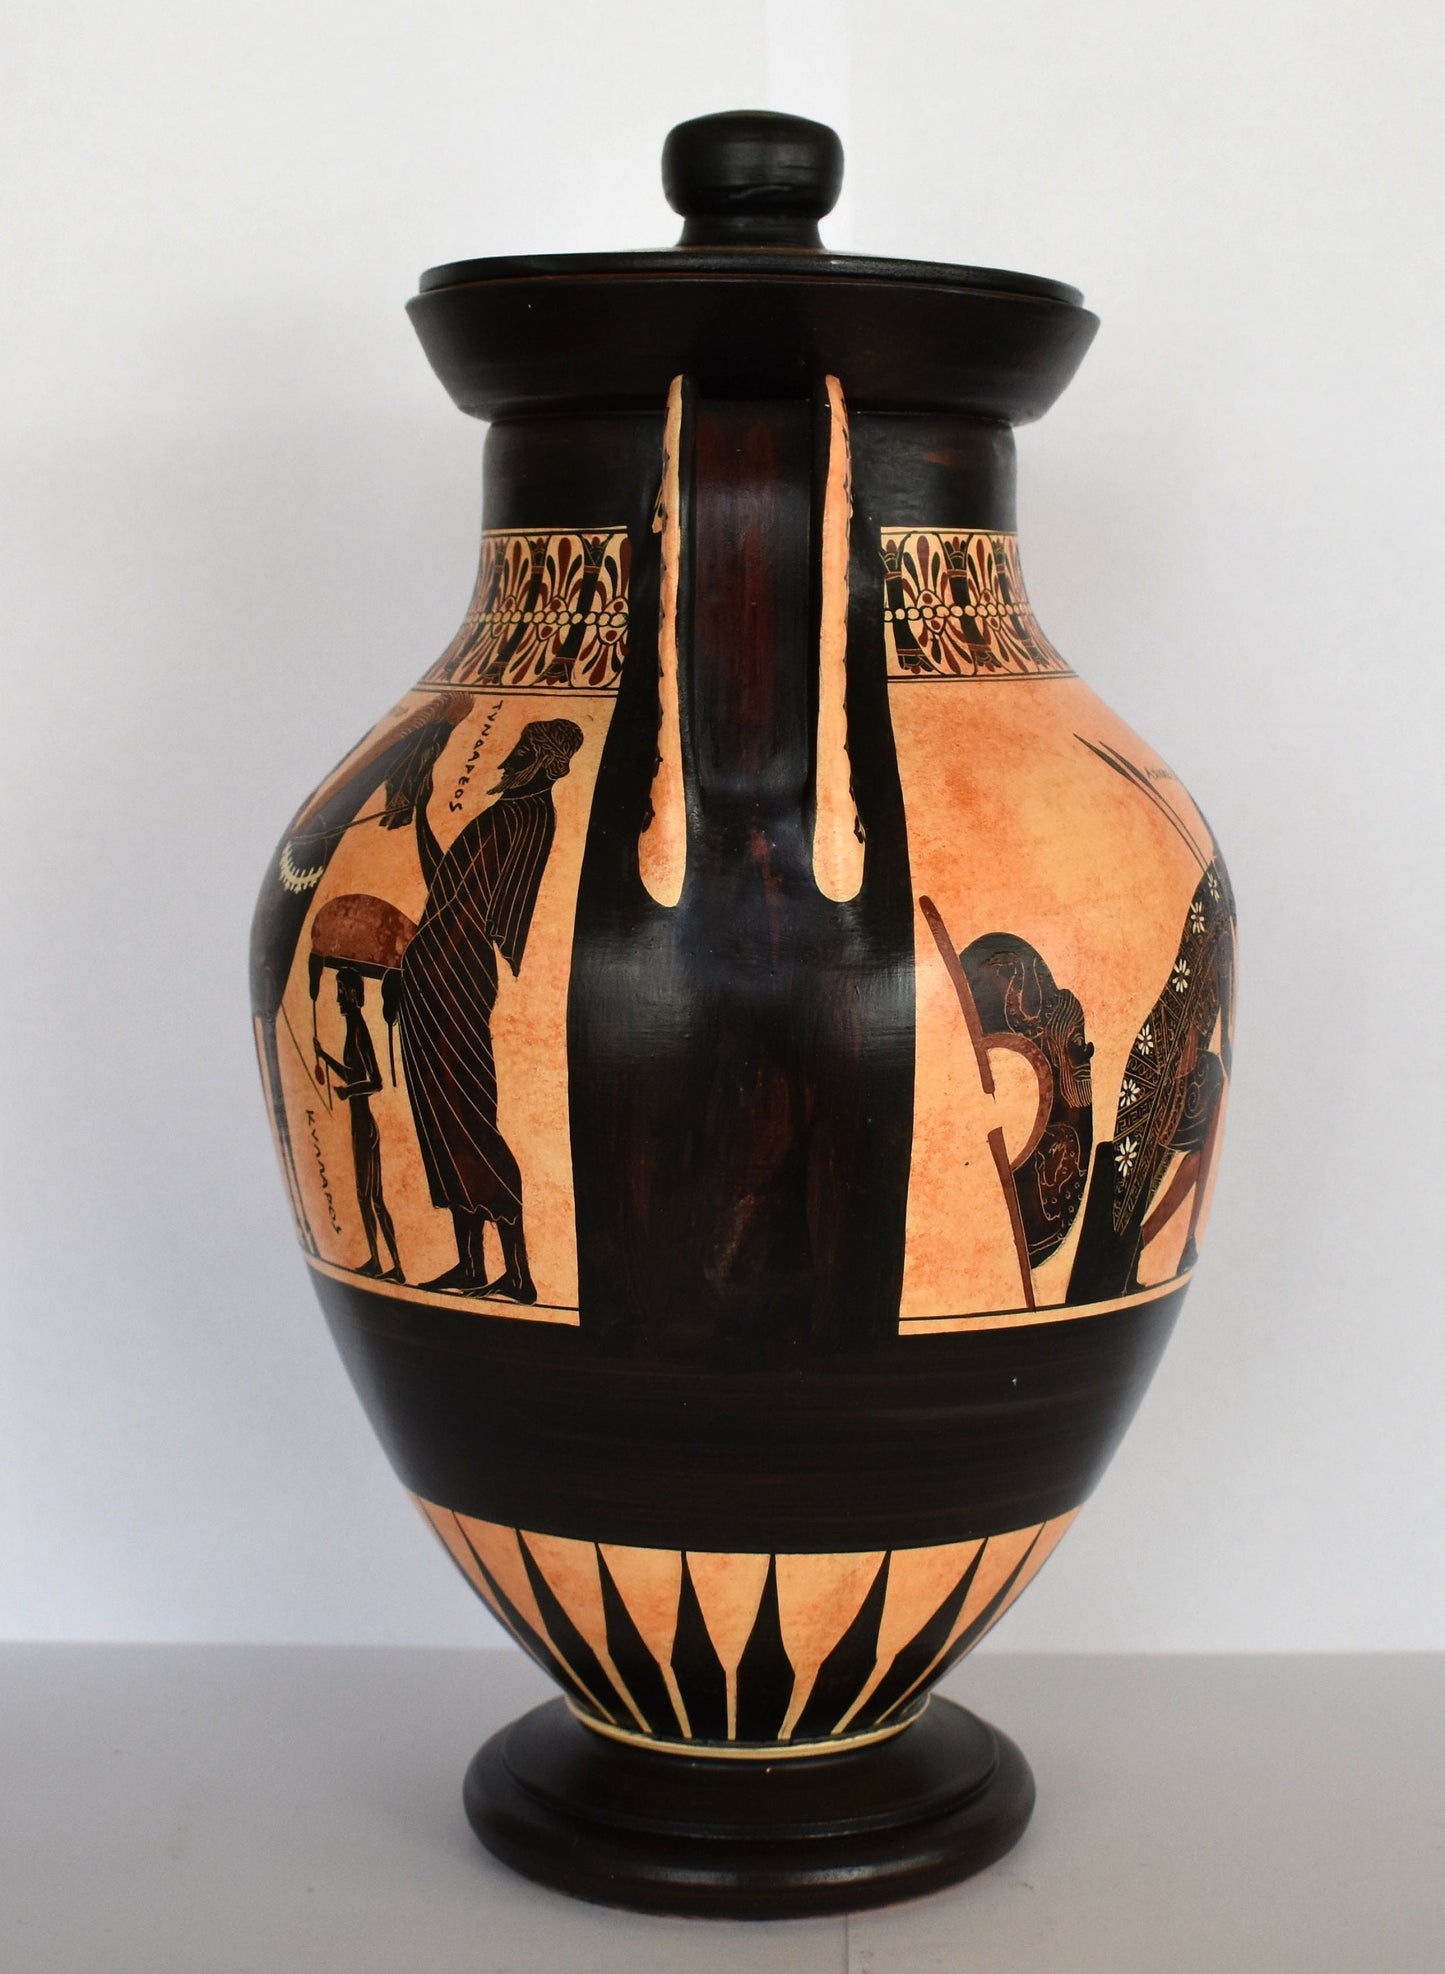 Achilles and Ajax playing Dice - Trojan War, Homer's Iliad - Attic Black Figure - Musei Vaticani - Replica - Ceramic Vase